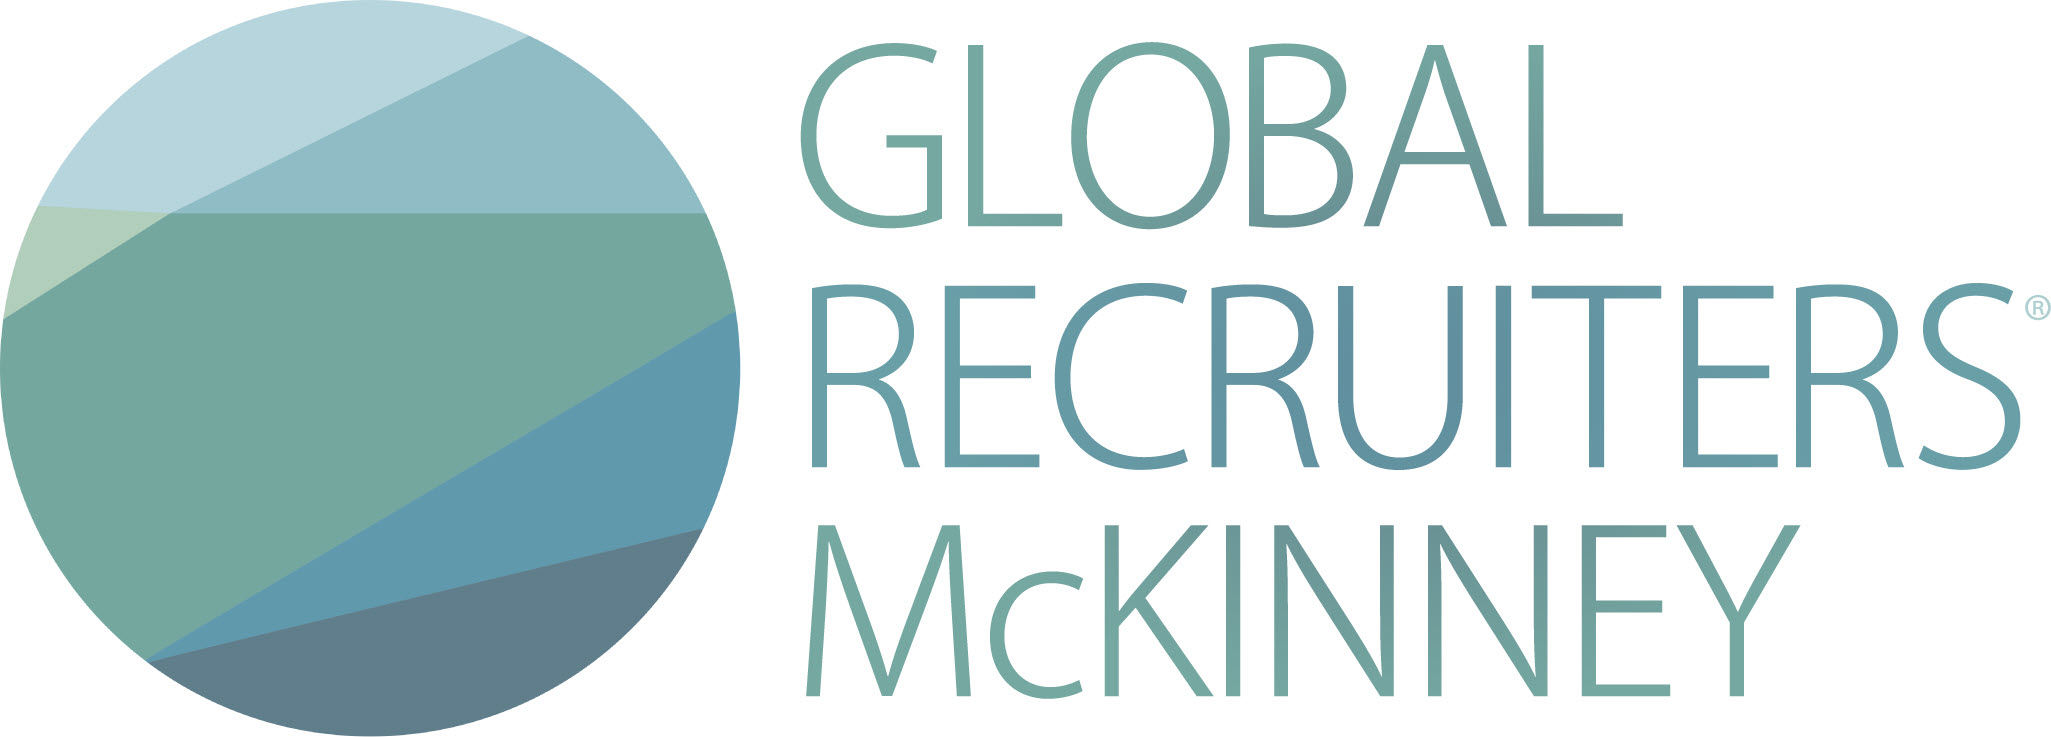 Global Recruiters of McKinney